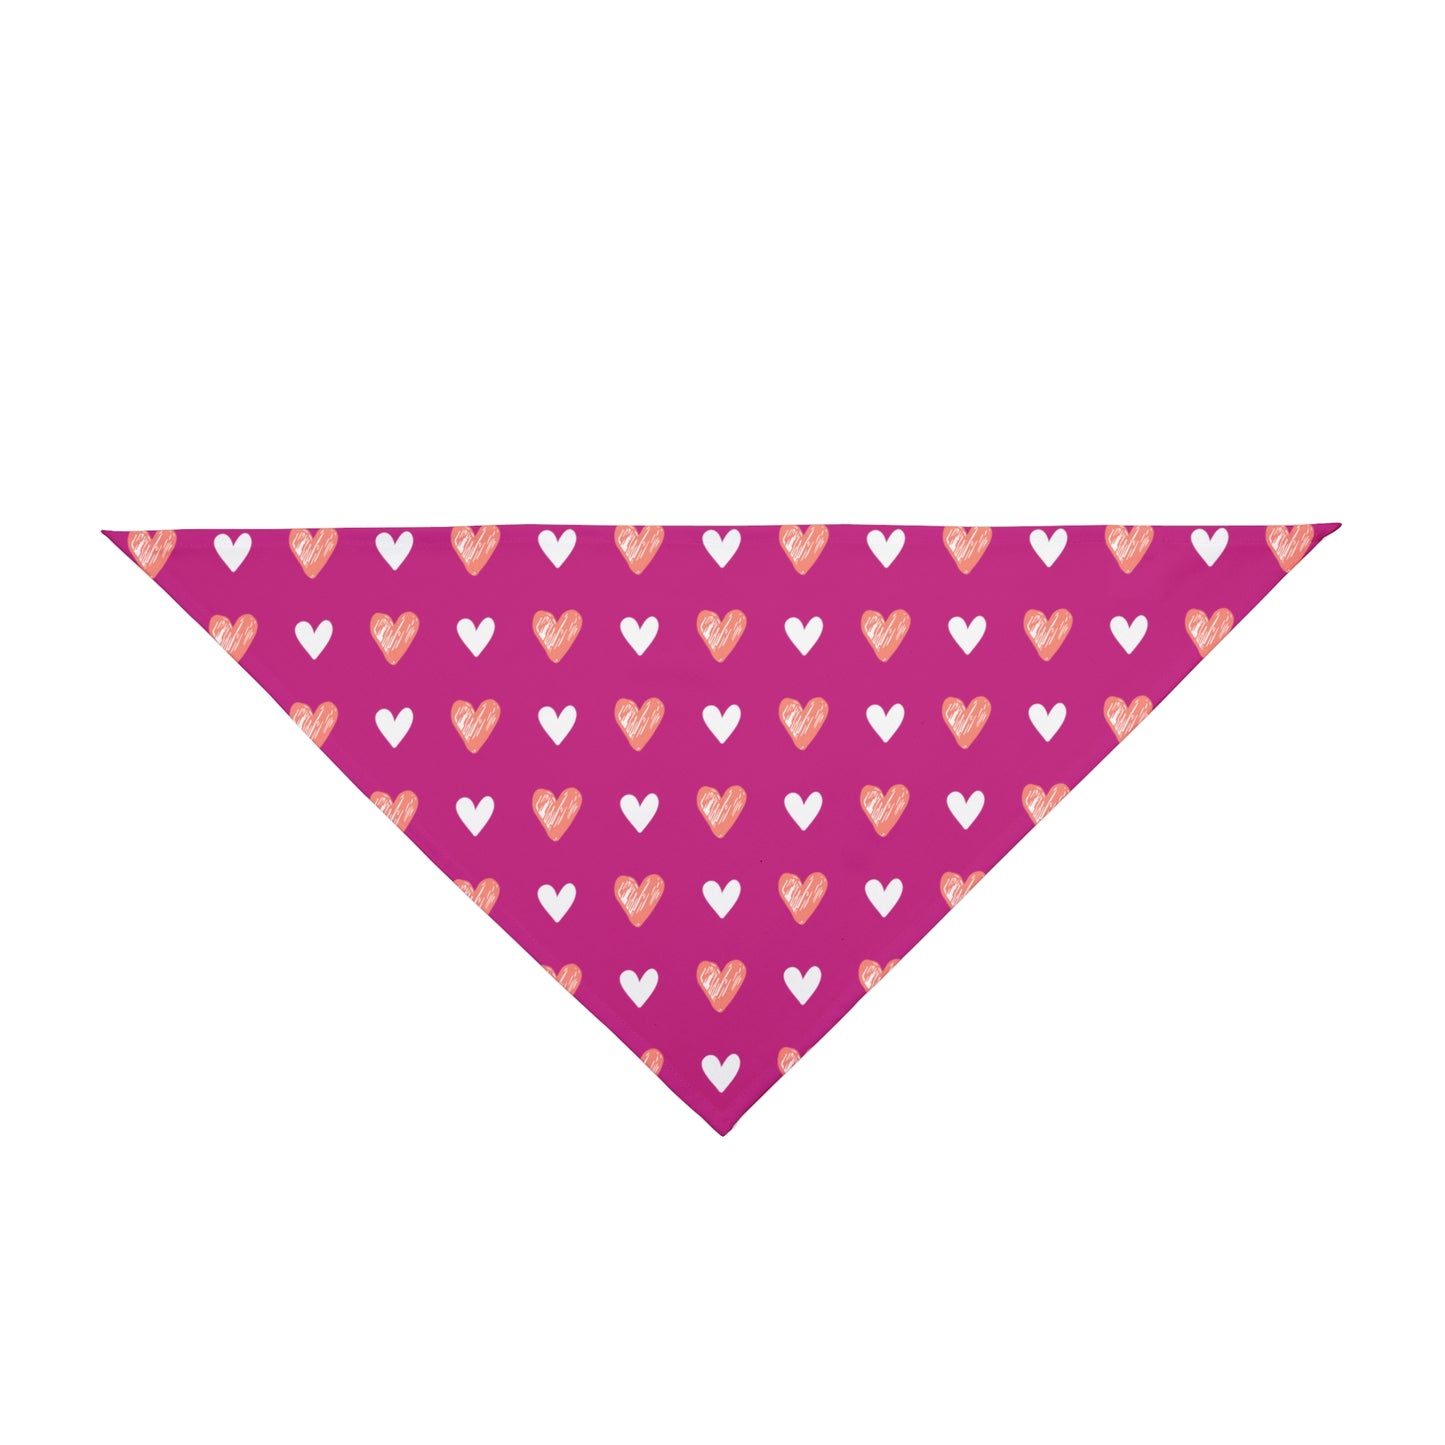 A bandana with a beautiful hearts pattern design. Bandana's Color is pink